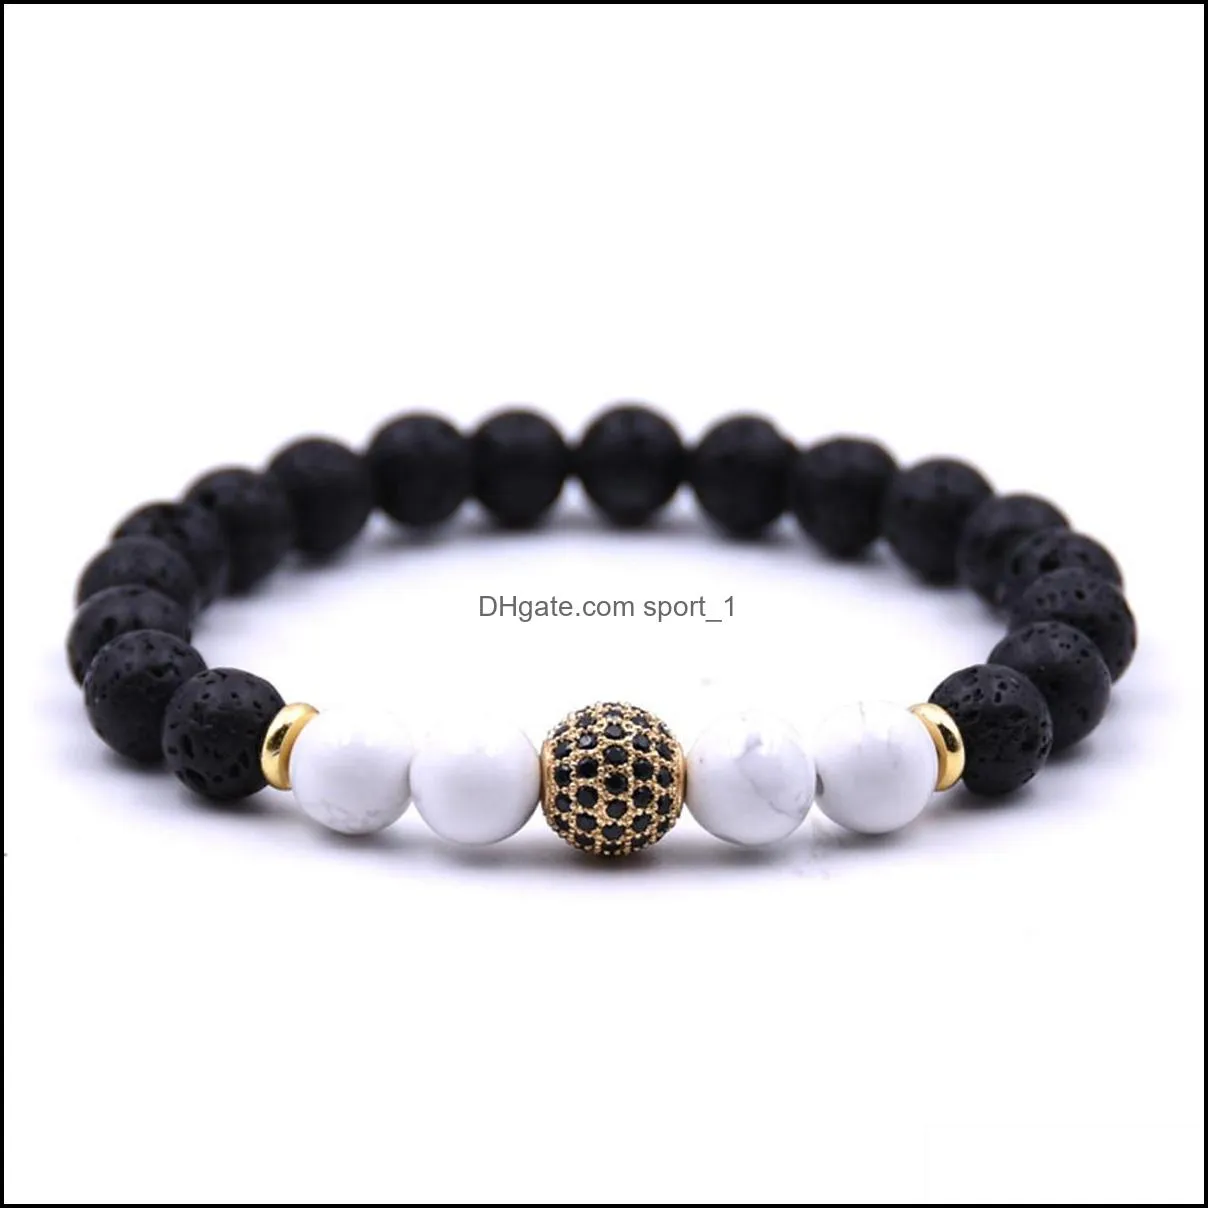 10pc/set natural 8mm lava stone cubic zircon ball beads bracelet gifts for men women handmade jewelry